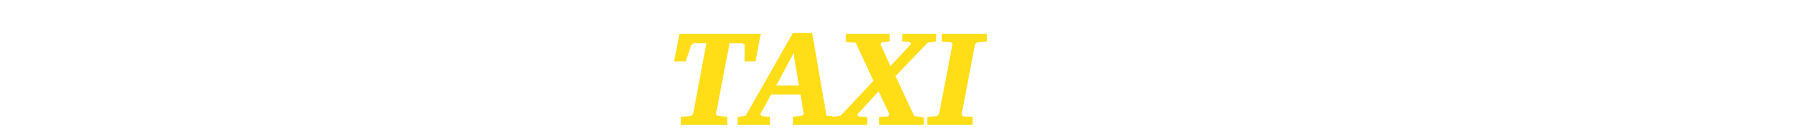 Storsjö Taxi Logo - Start